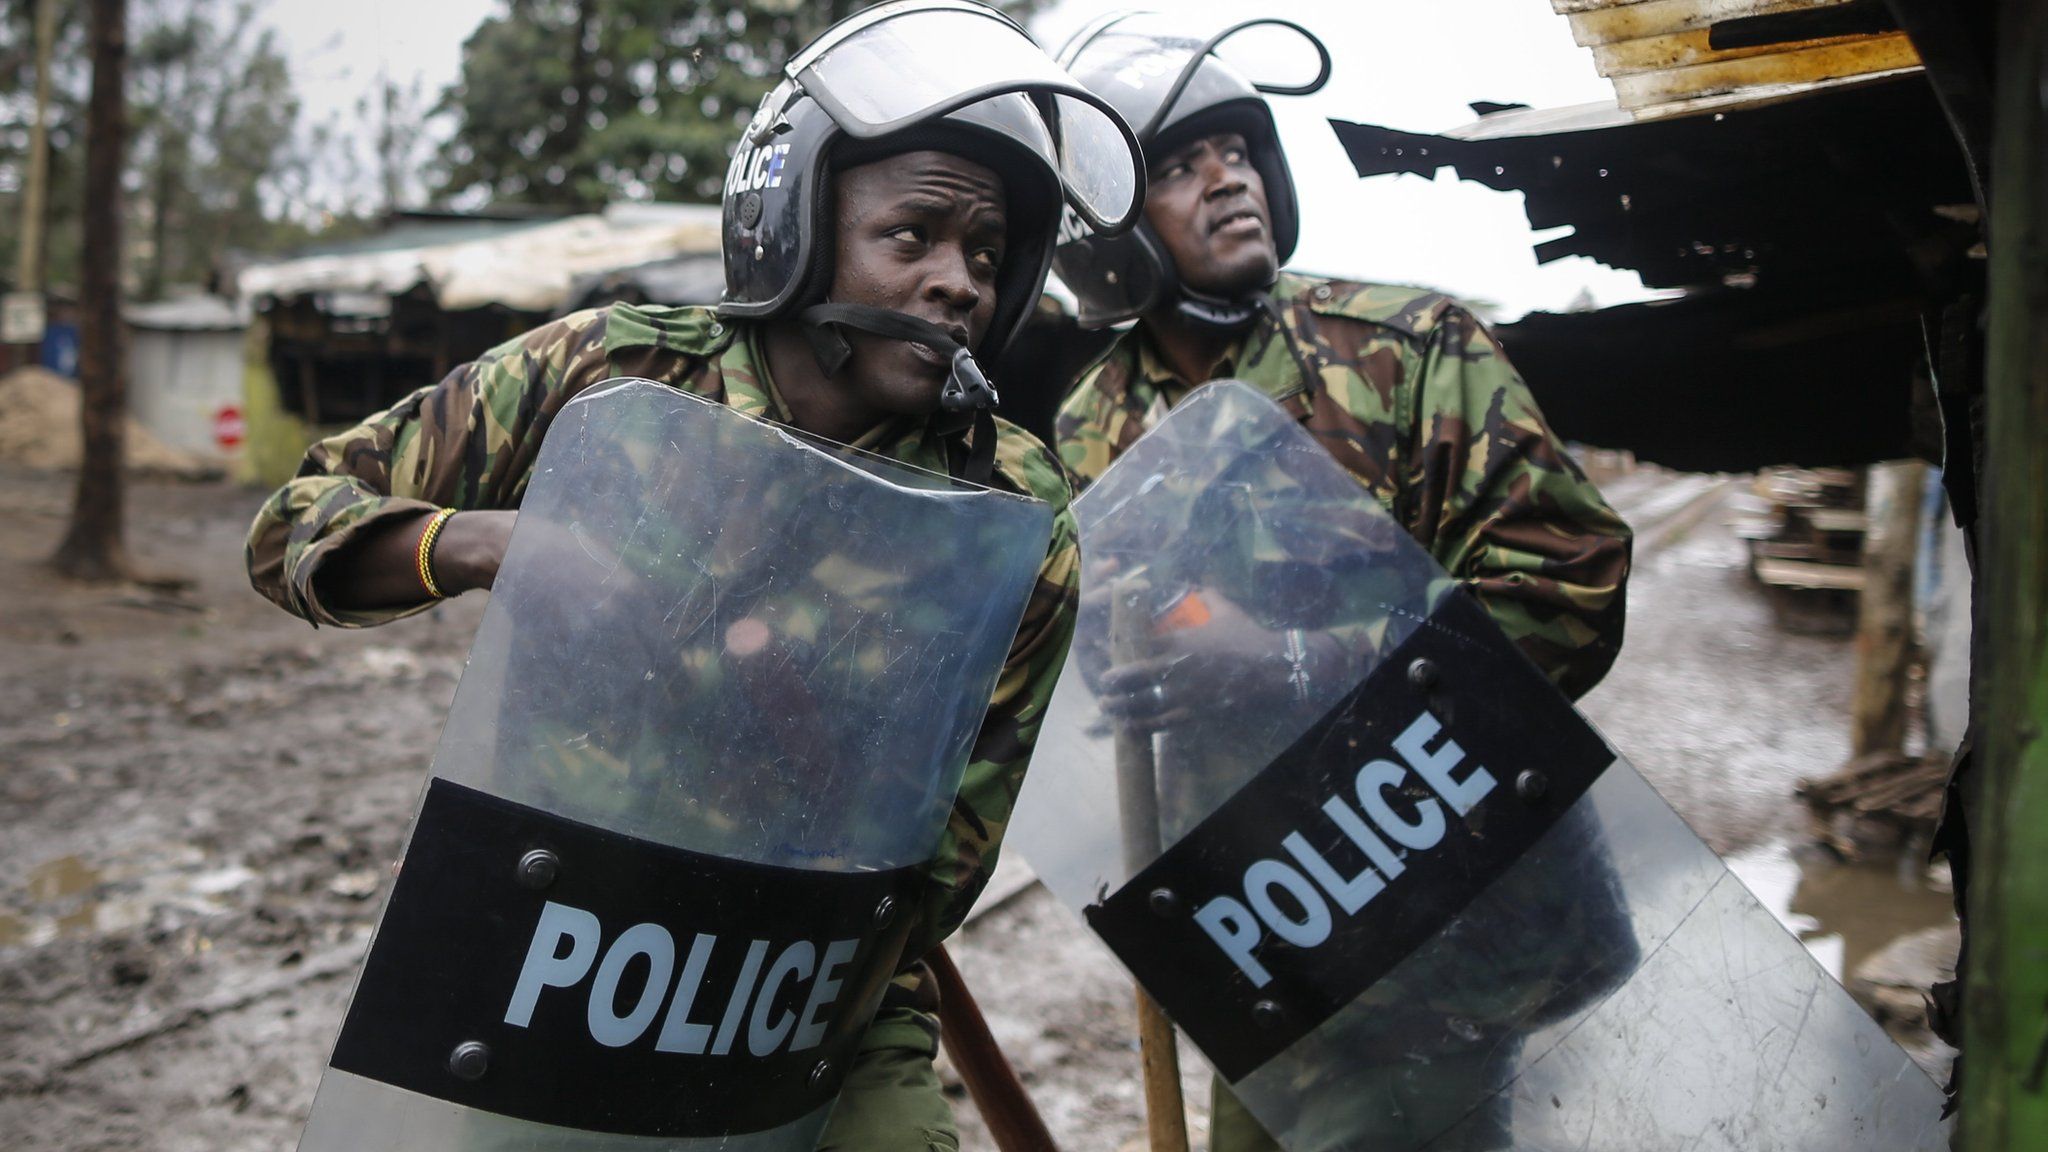 Police in Kibera, Kenya, on election day - 26 October 2017